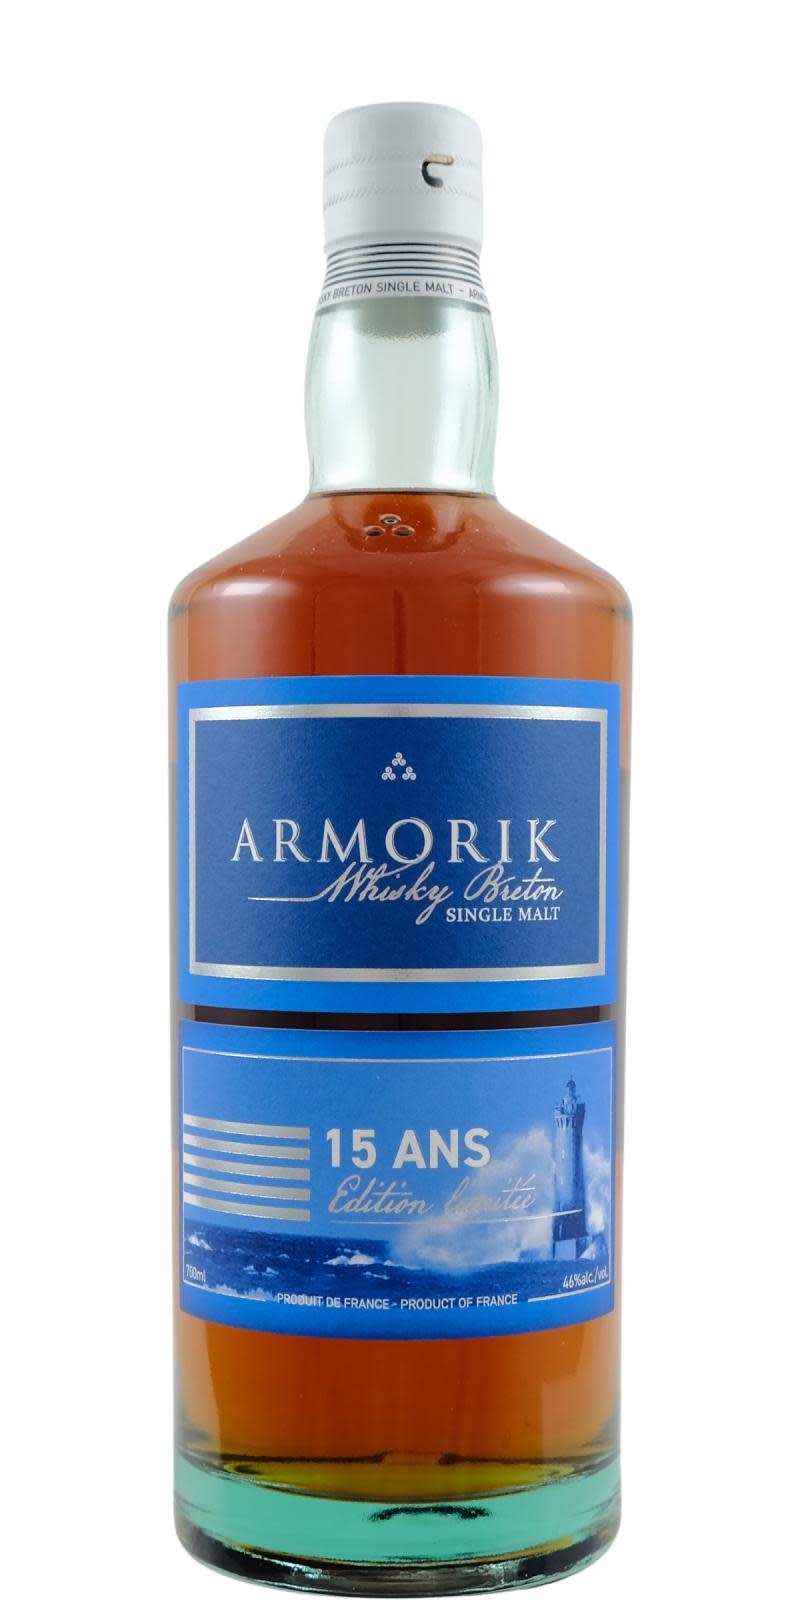 ARMORIK Single Malt, Whisky Breton